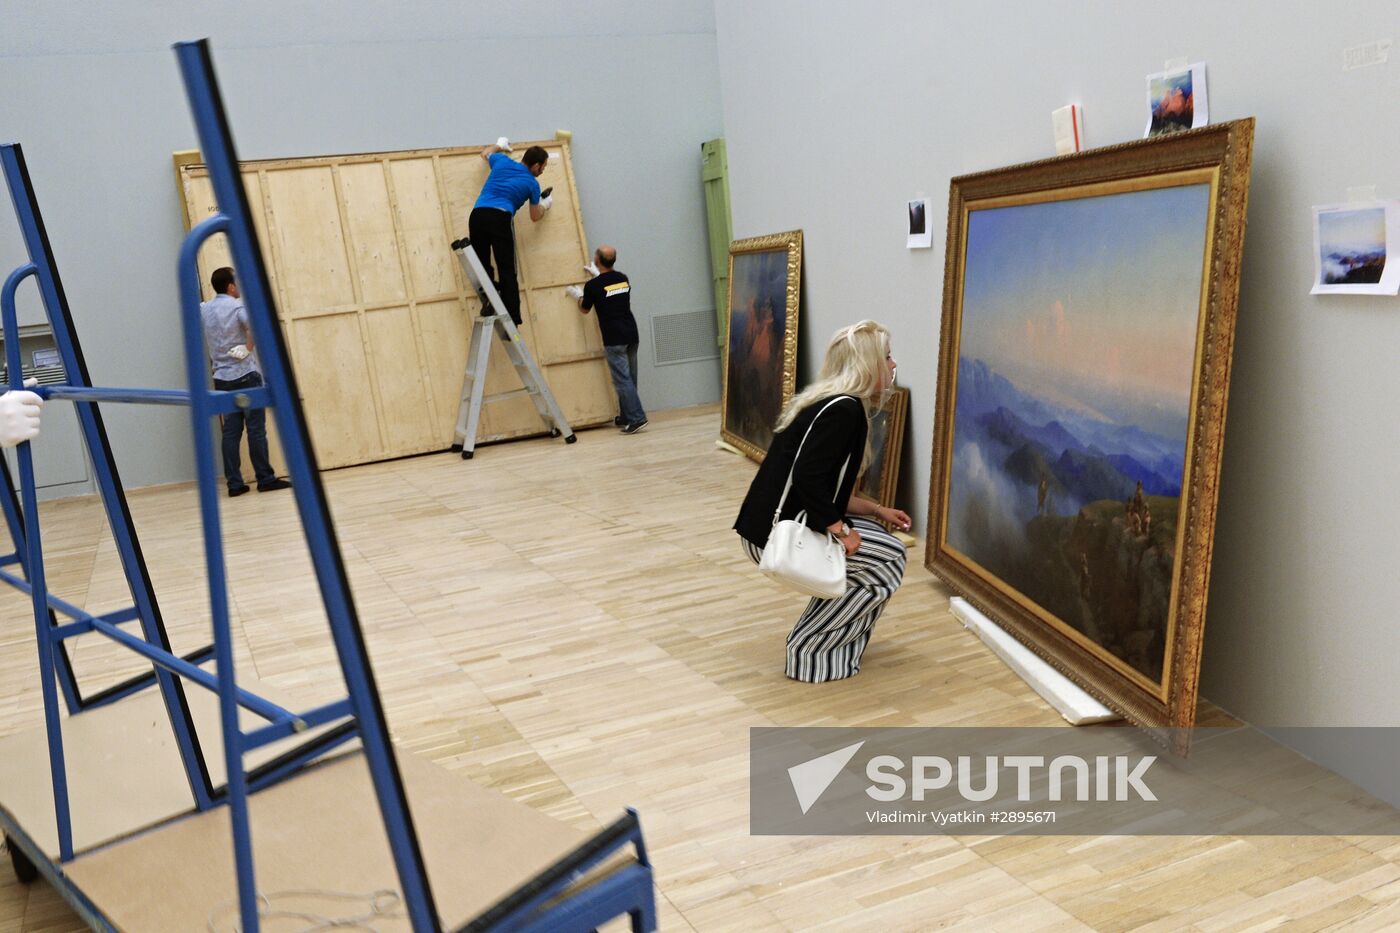 Ivan Aivazovsky's 200th birthday exhibition